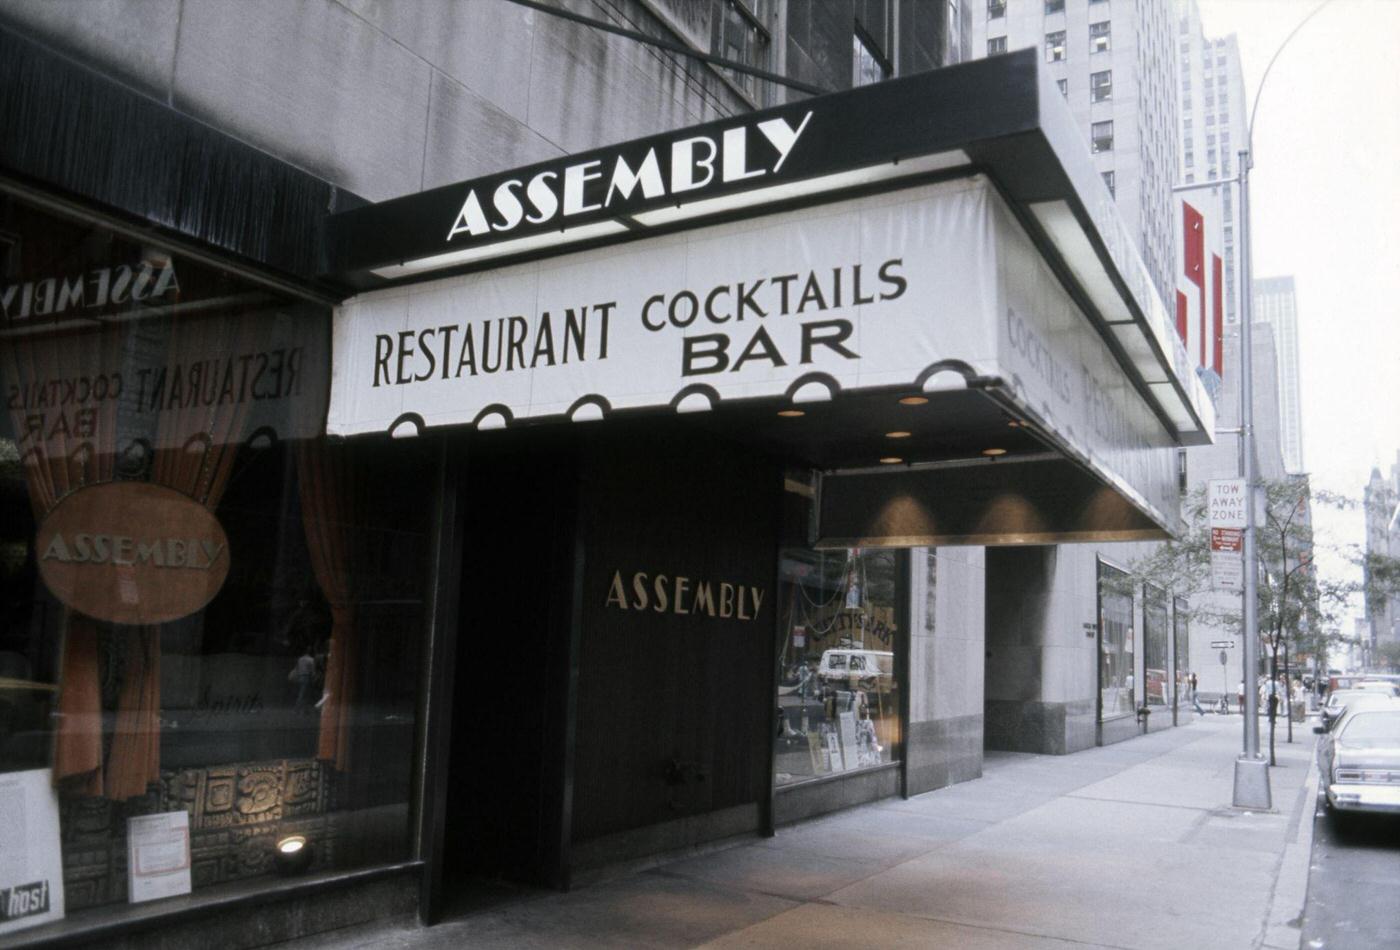 Assembly Restaurant And Bar At 16 West 51St Street In Rockefeller Center, Manhattan, 1976